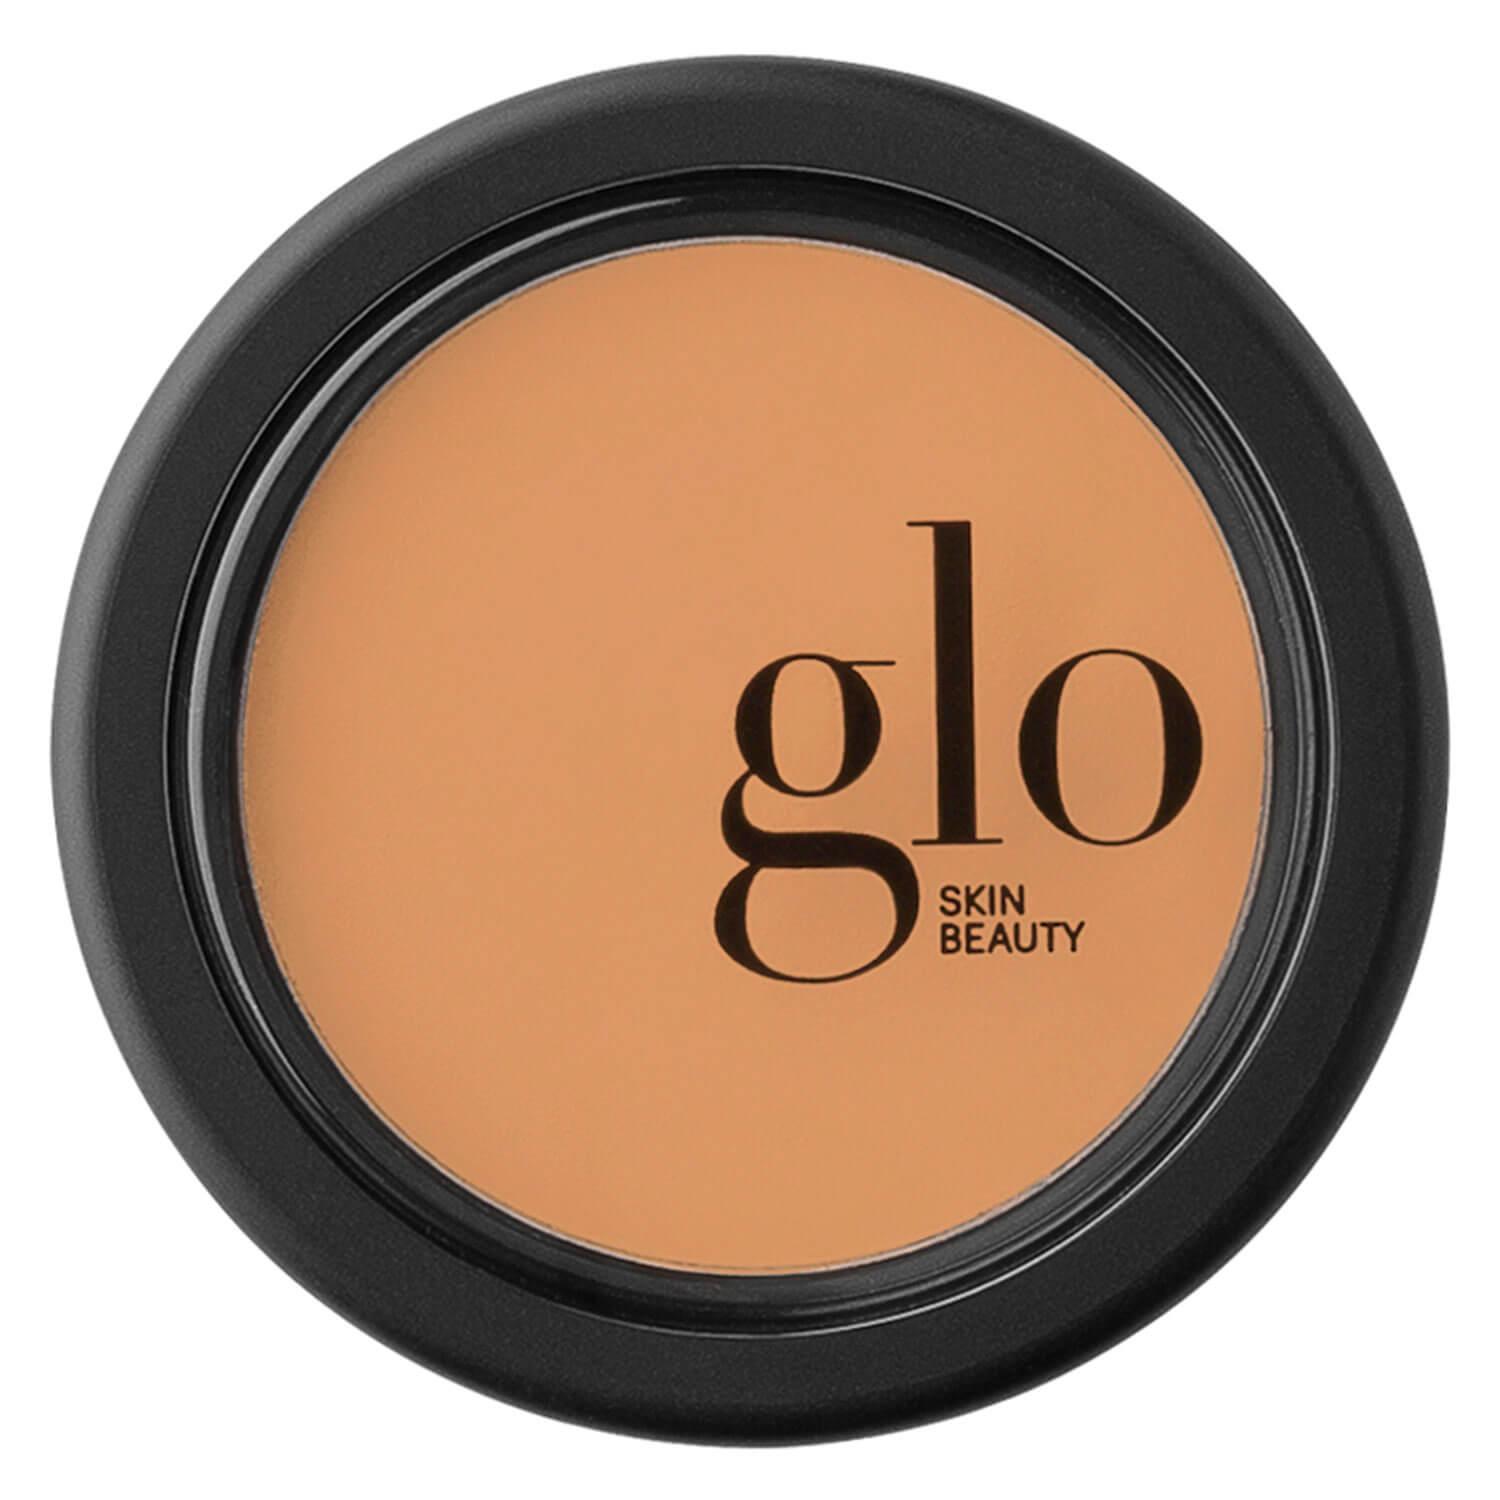 Glo Skin Beauty Camouflage - Oil Free Camouflage Honey